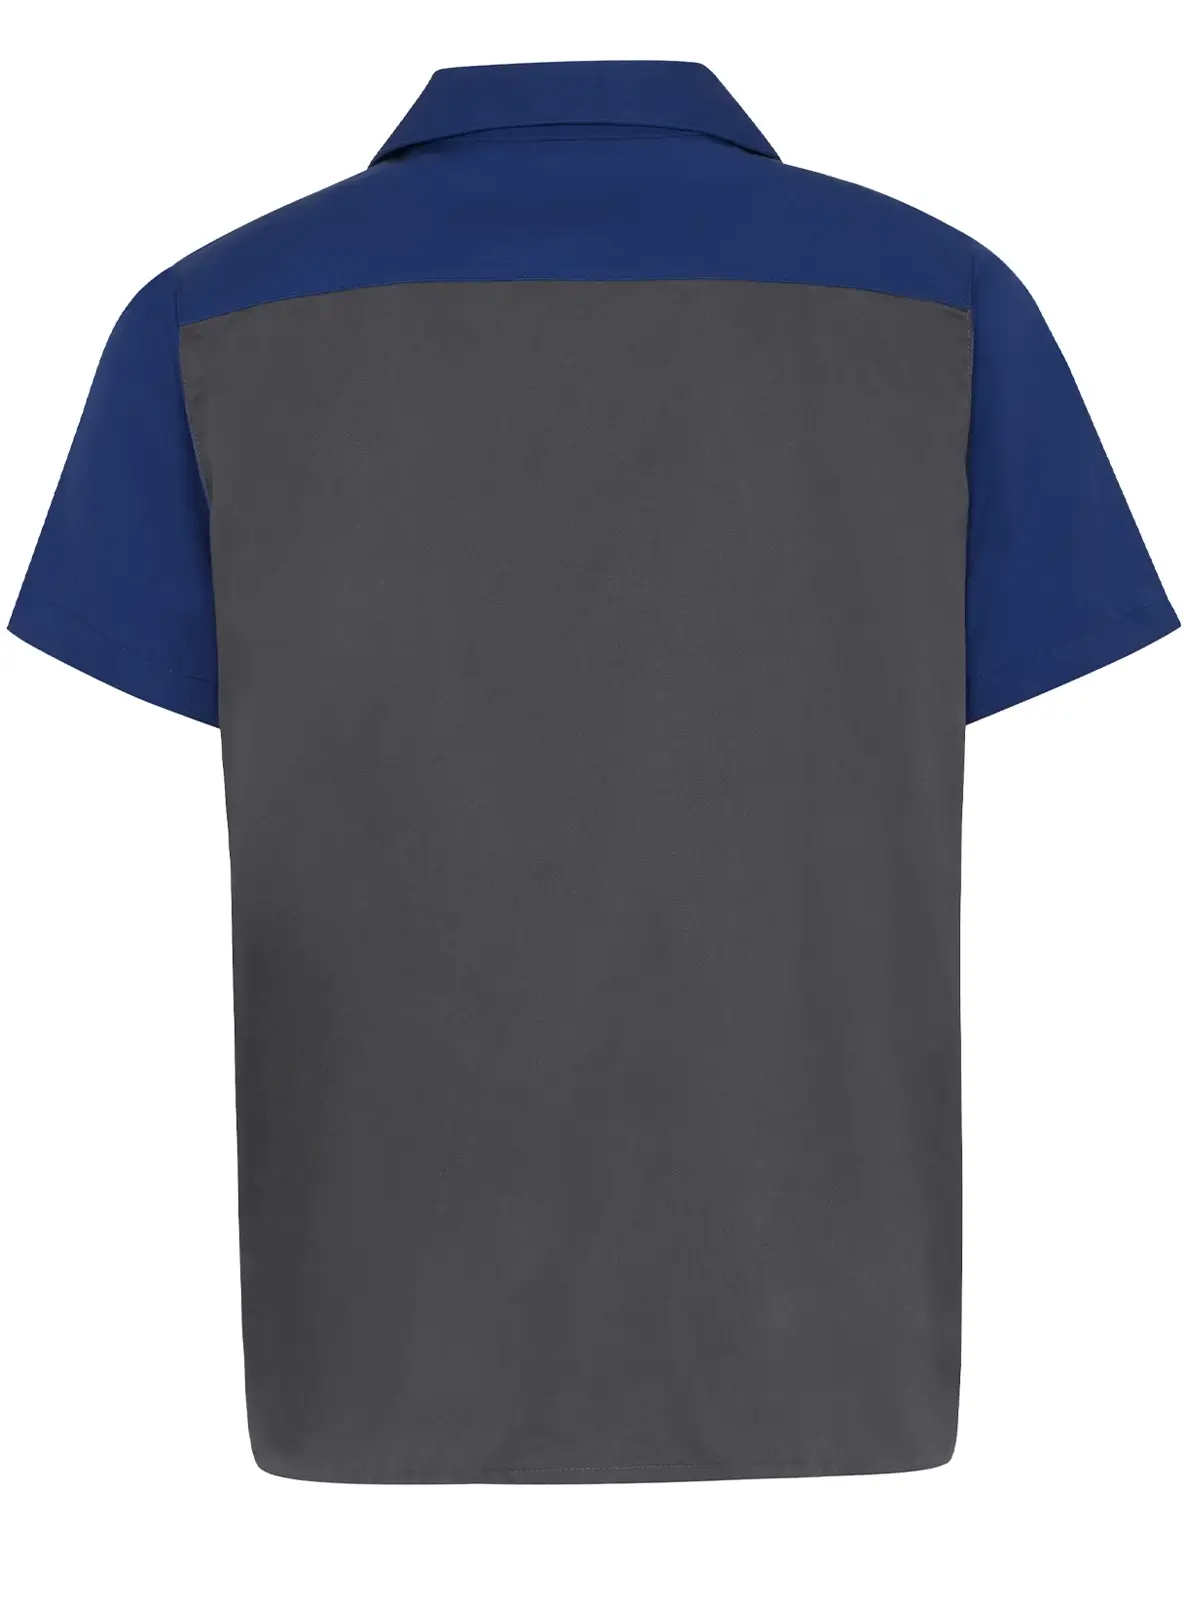 t-shirt for mechanics gray color